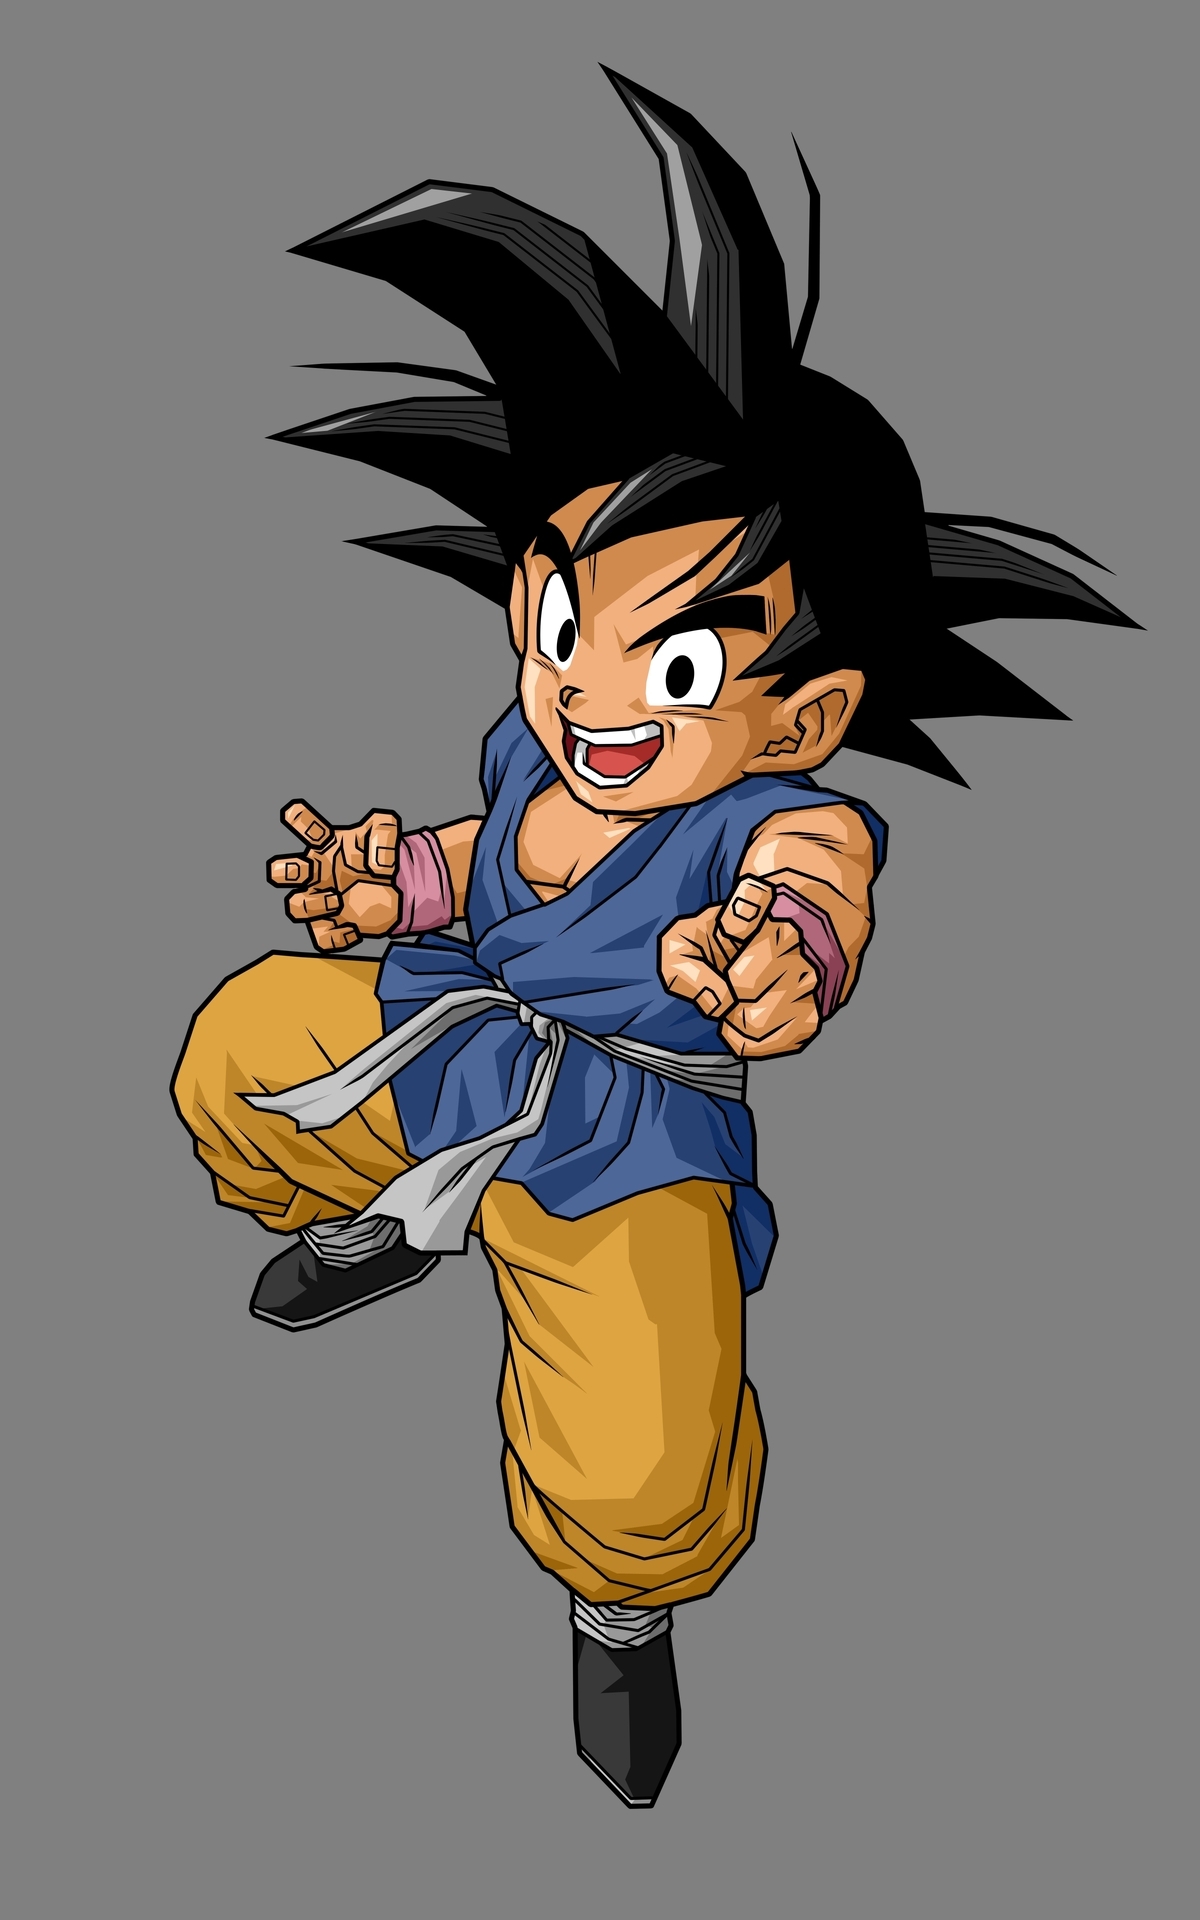 Image: Kid, hair, background, Dragon ball, Son Goku, karate